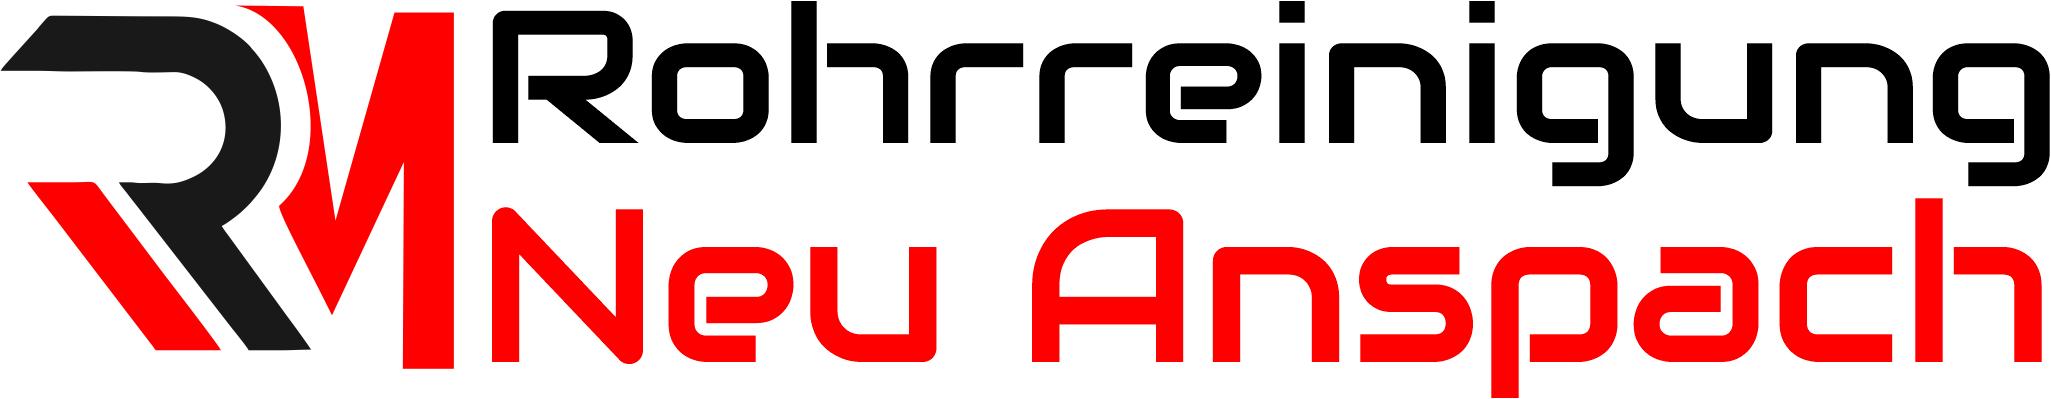 Rohrreinigung Neu Anspach Logo